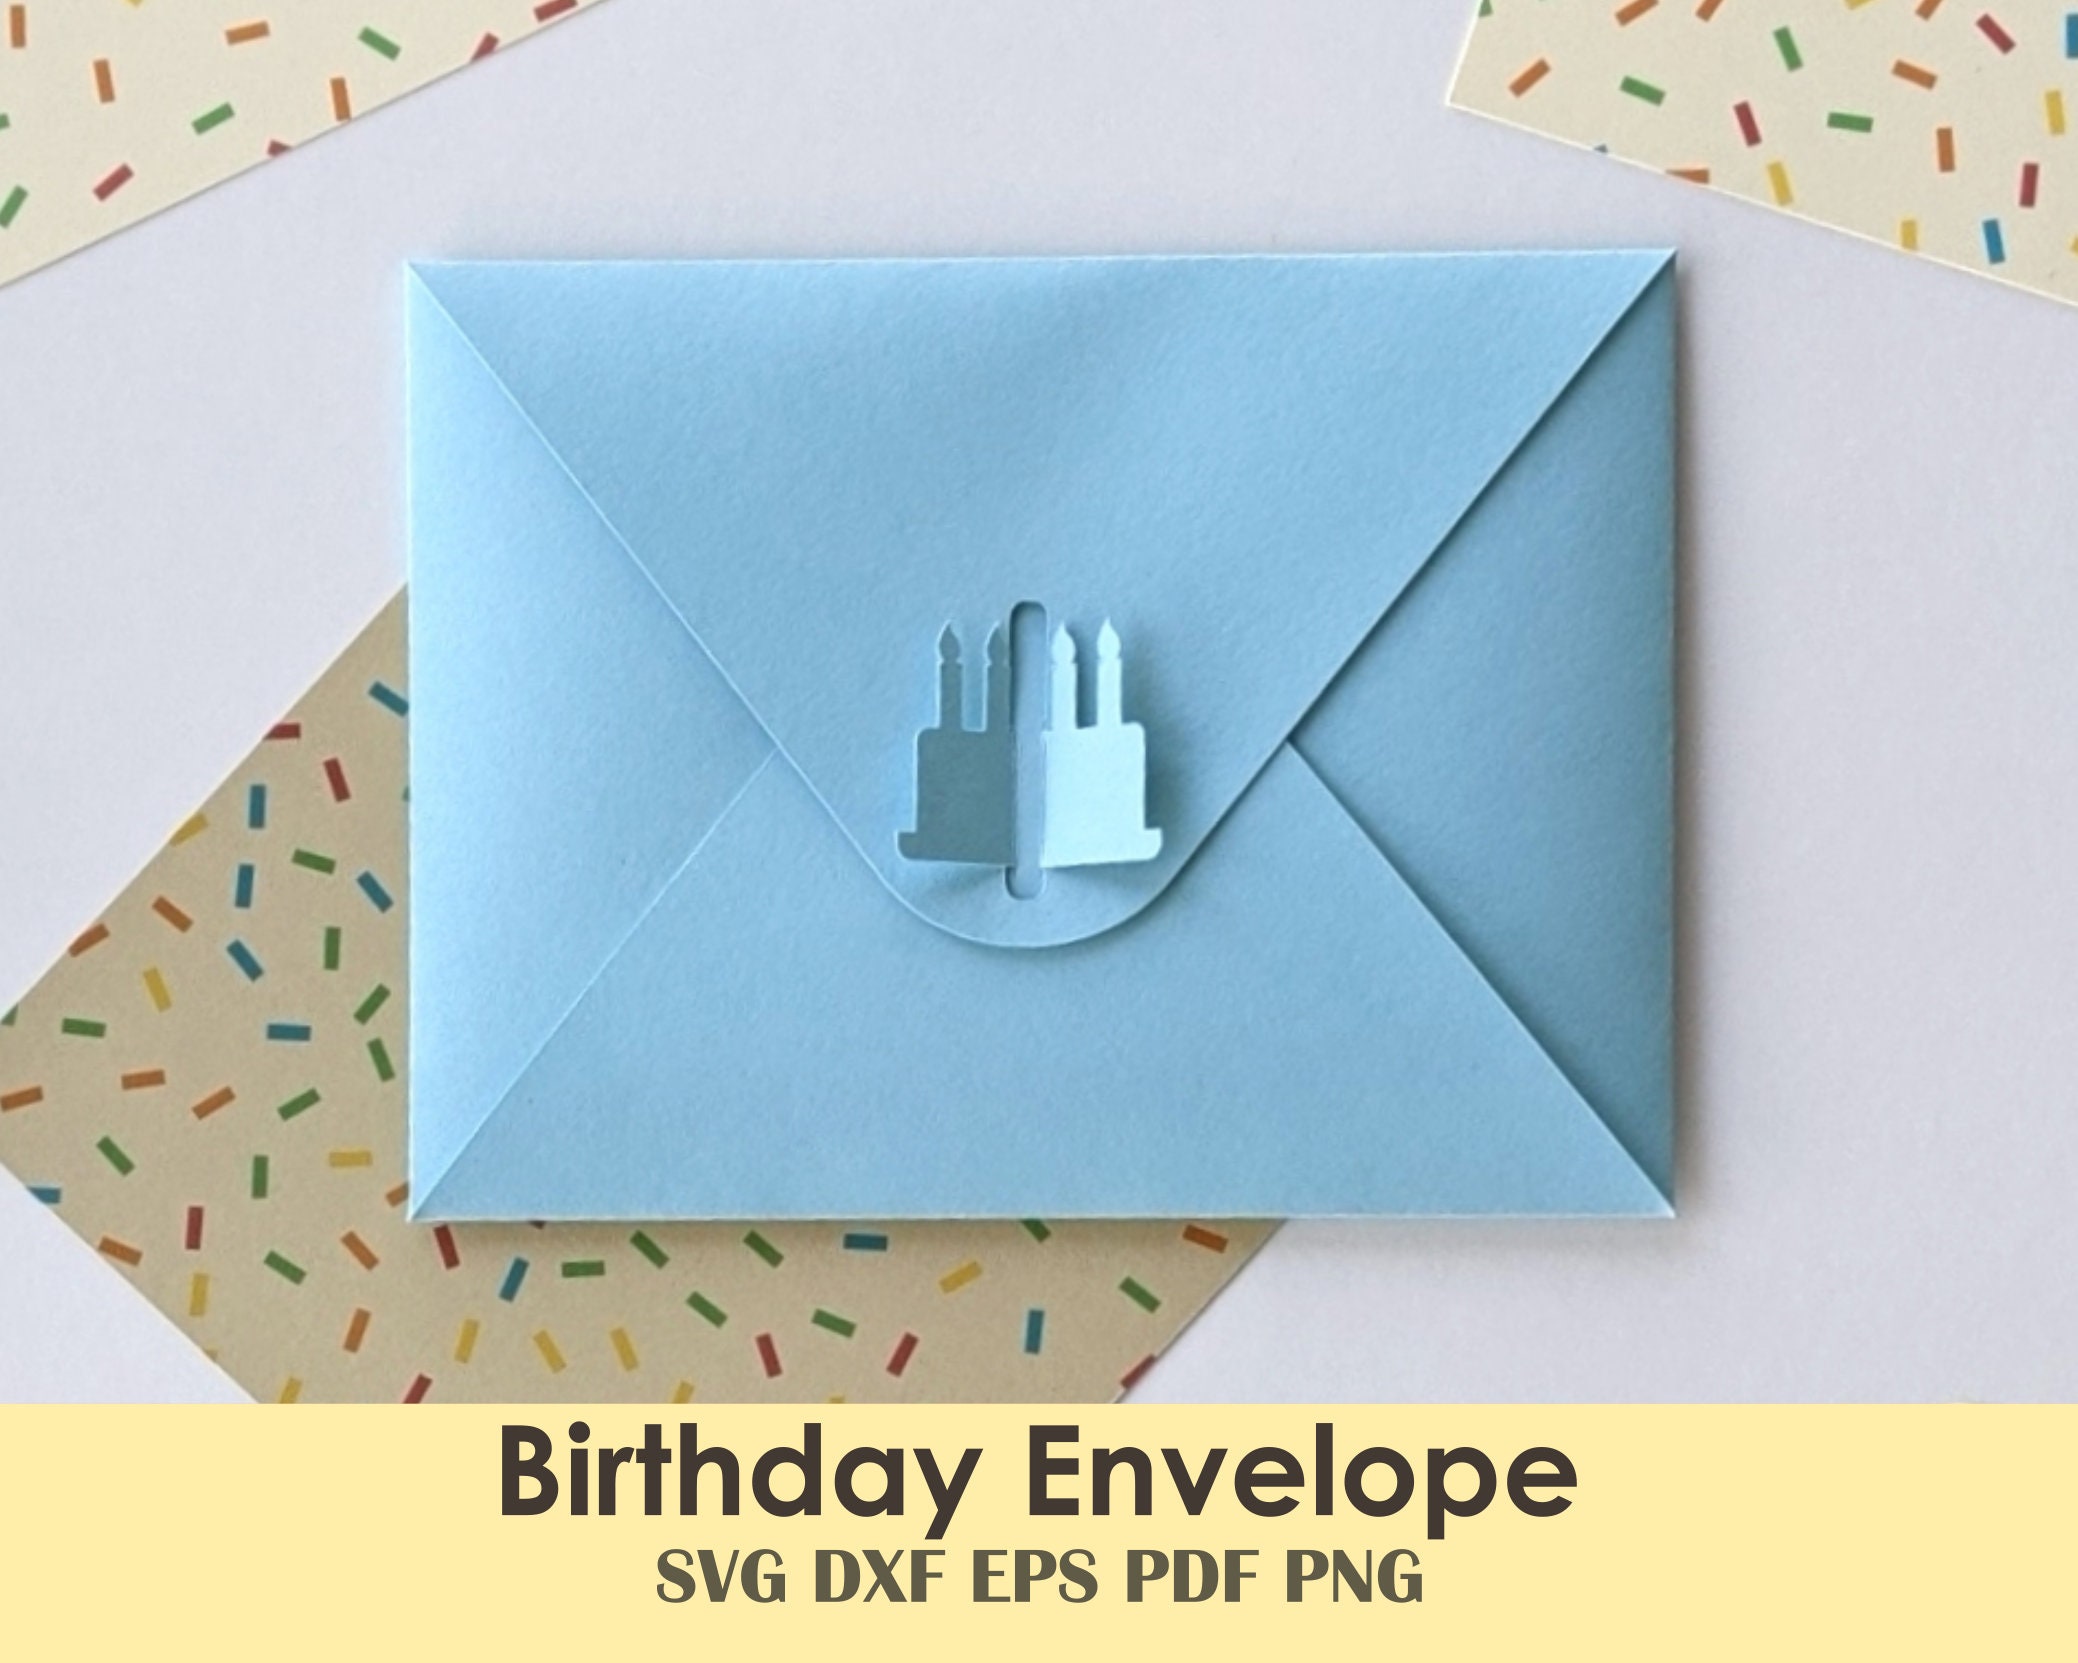 Birthday Envelope Template Diy A2 575 X 438 Etsy